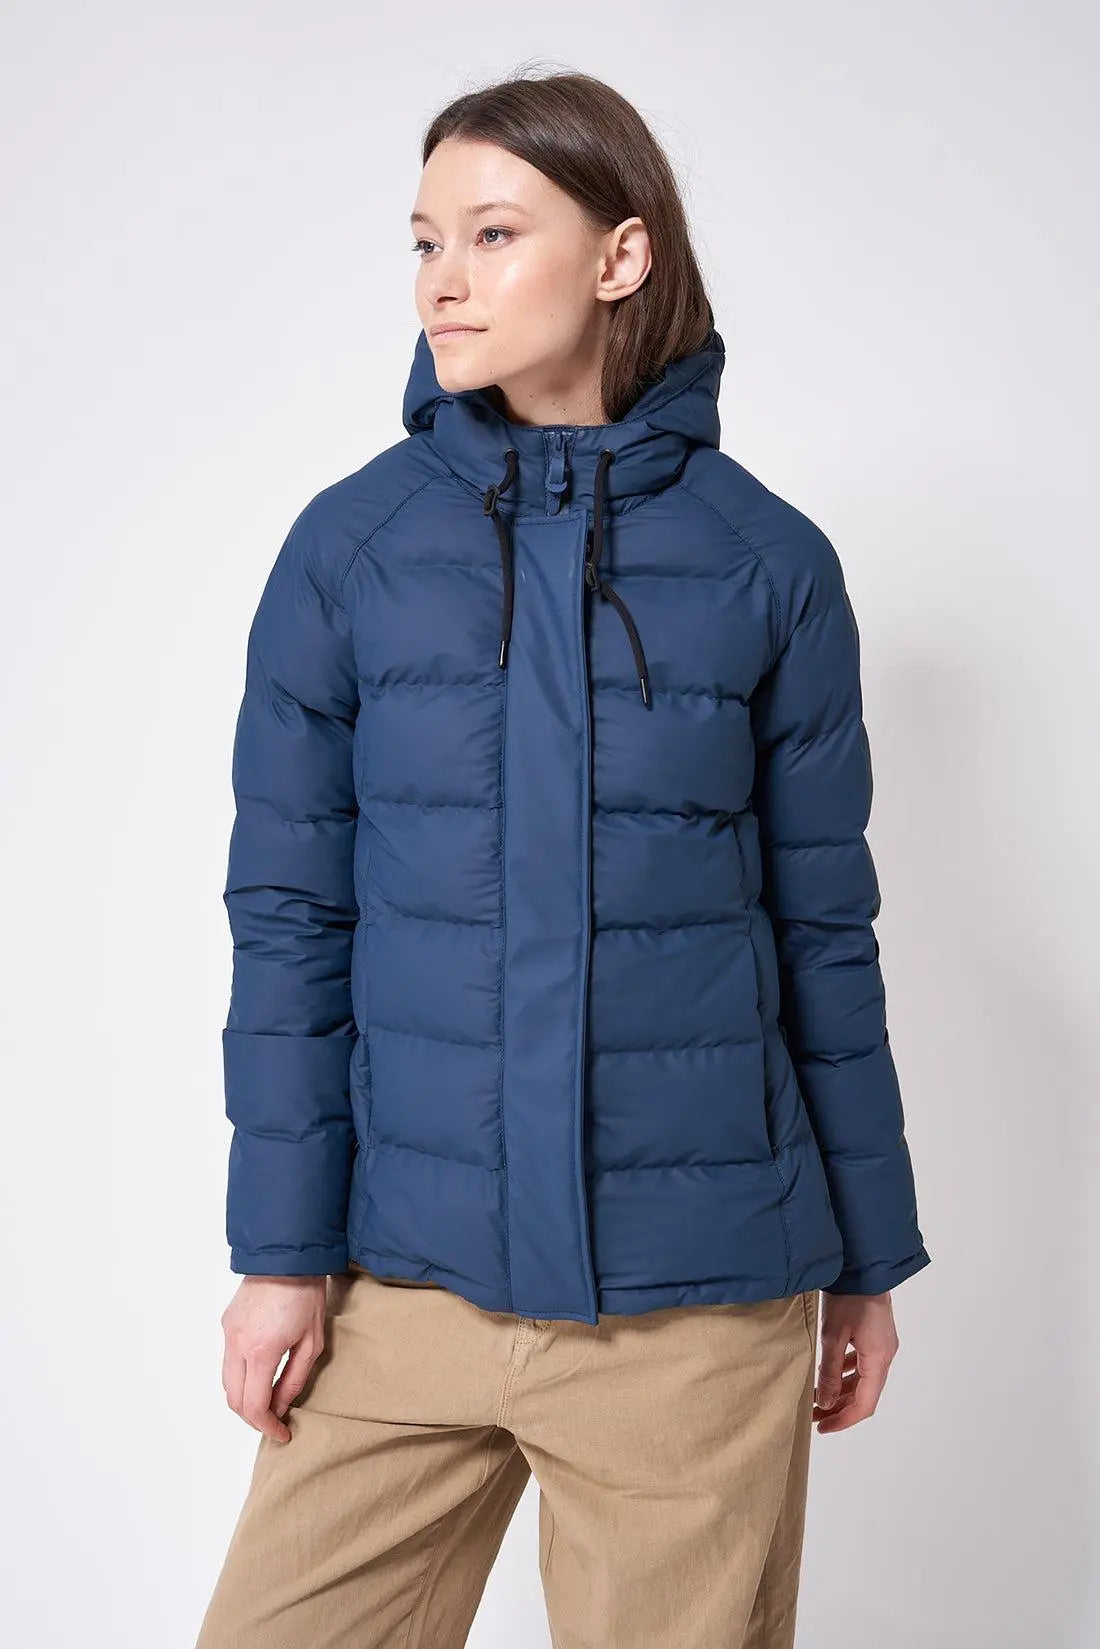 Buy Juelle Women Solid Nylon Hooded Full Sleeves Blue Jacket online